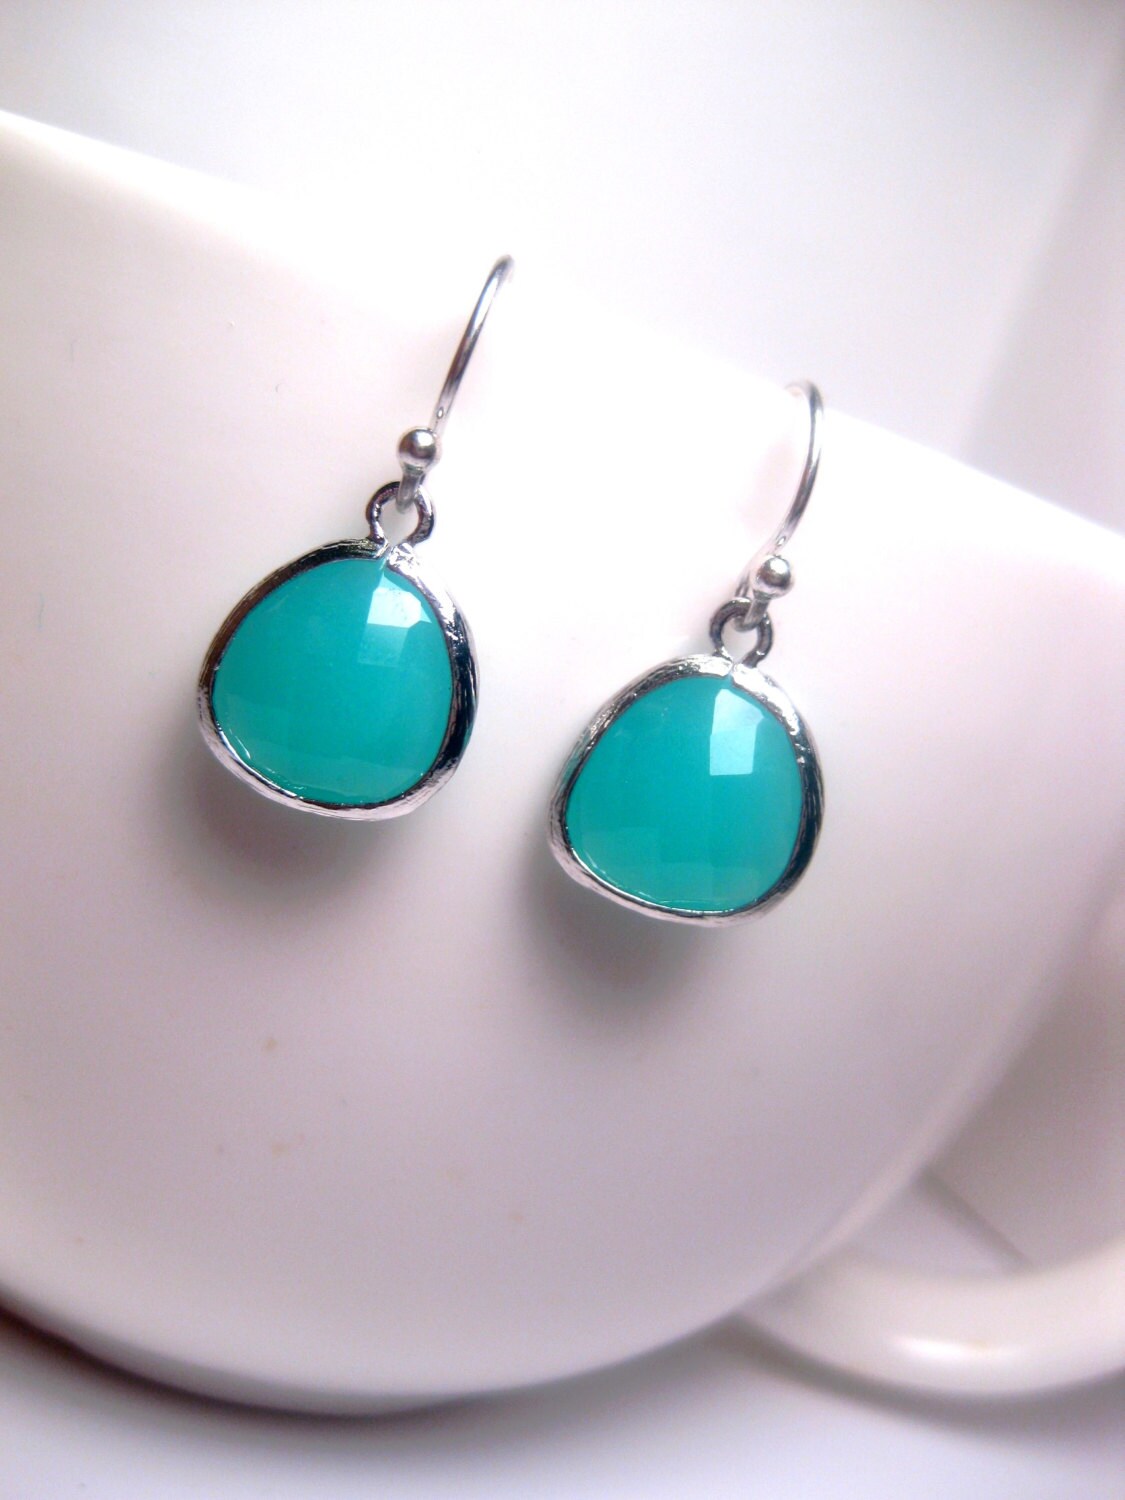 Turquoise Drop Earrings With Sterling Silver Dangle Earrings